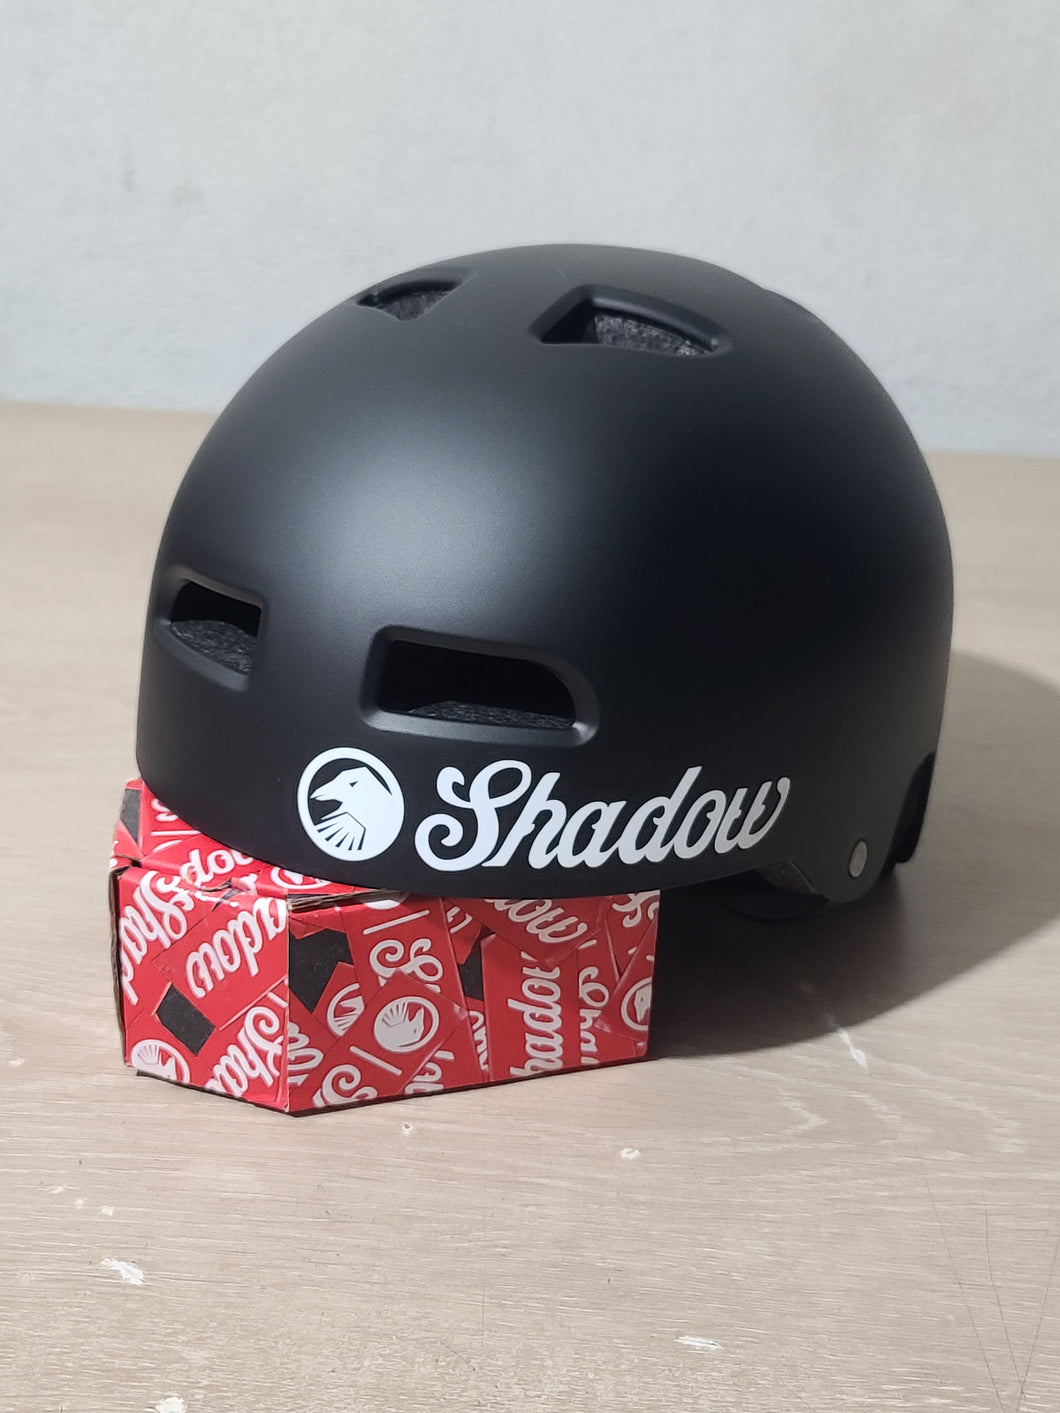 Shadow casco